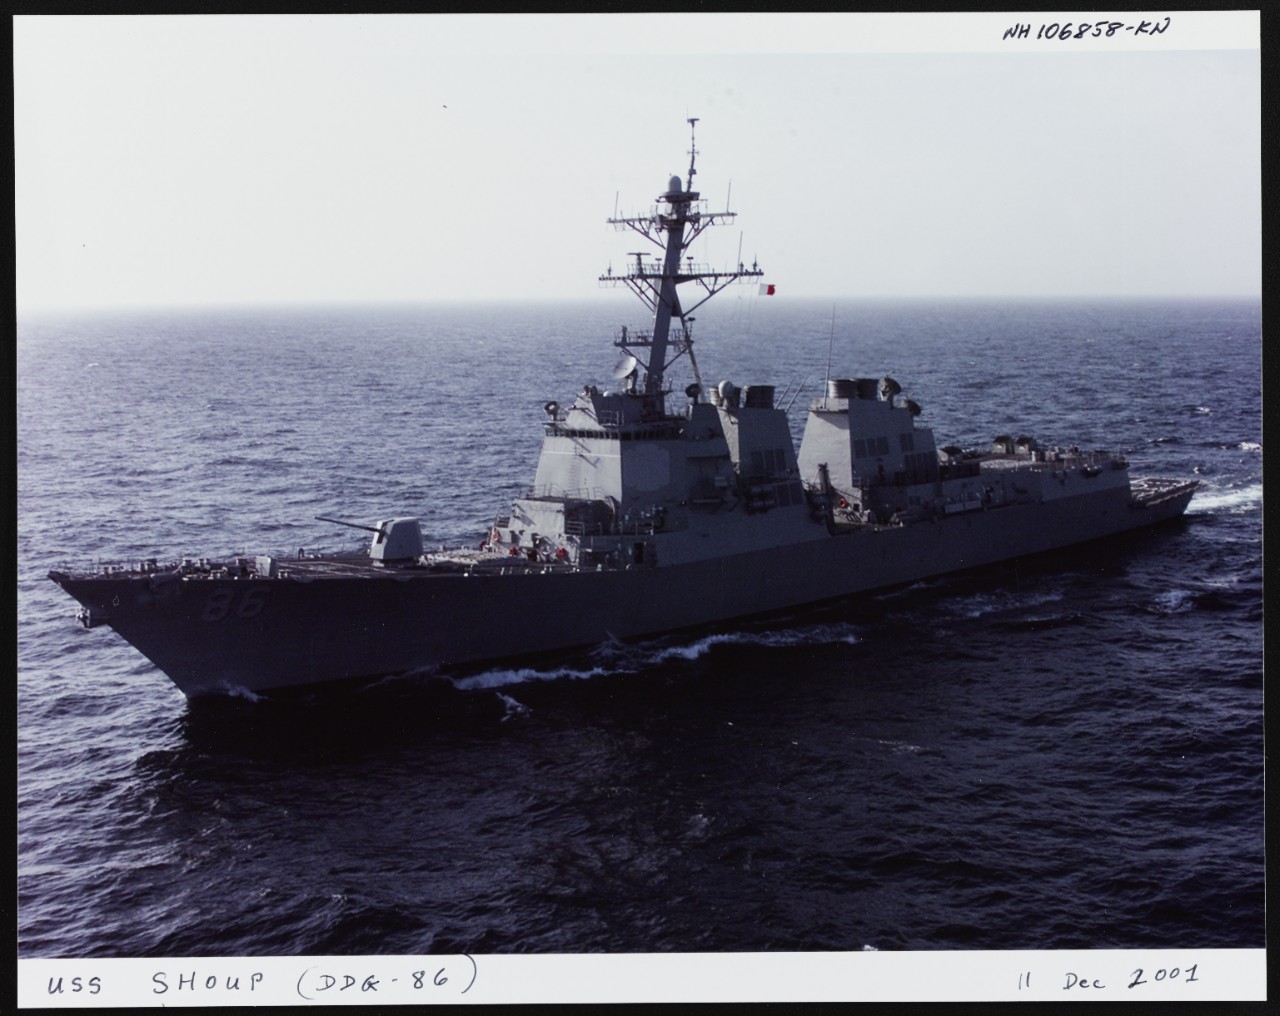 Photo # NH 106858-KN USS Shoup